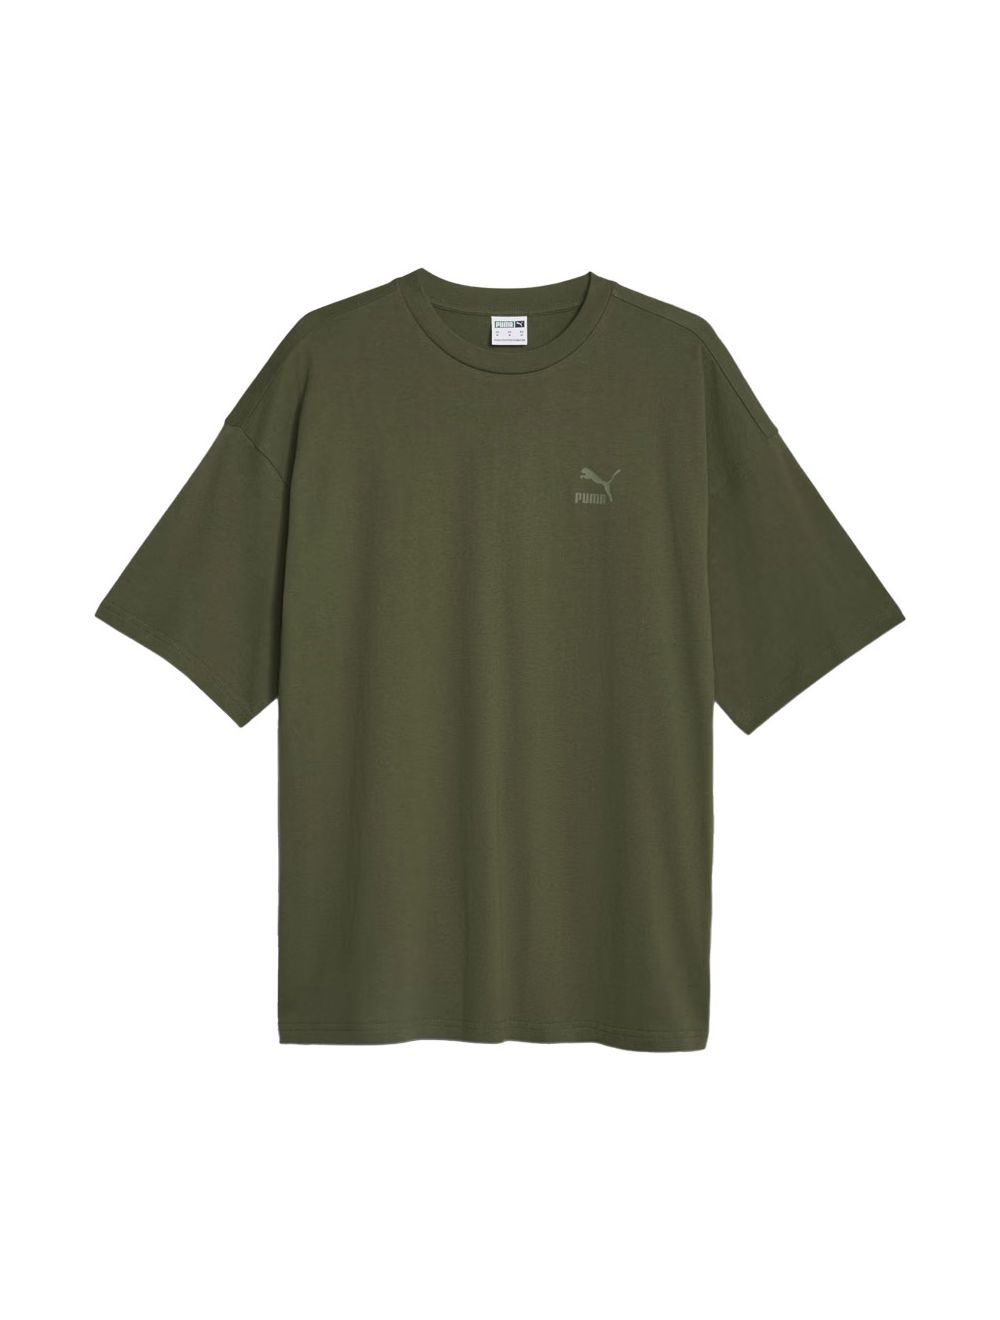 Shop Puma Better Classics Oversized Mens T-Shirt Myrtle Green | S